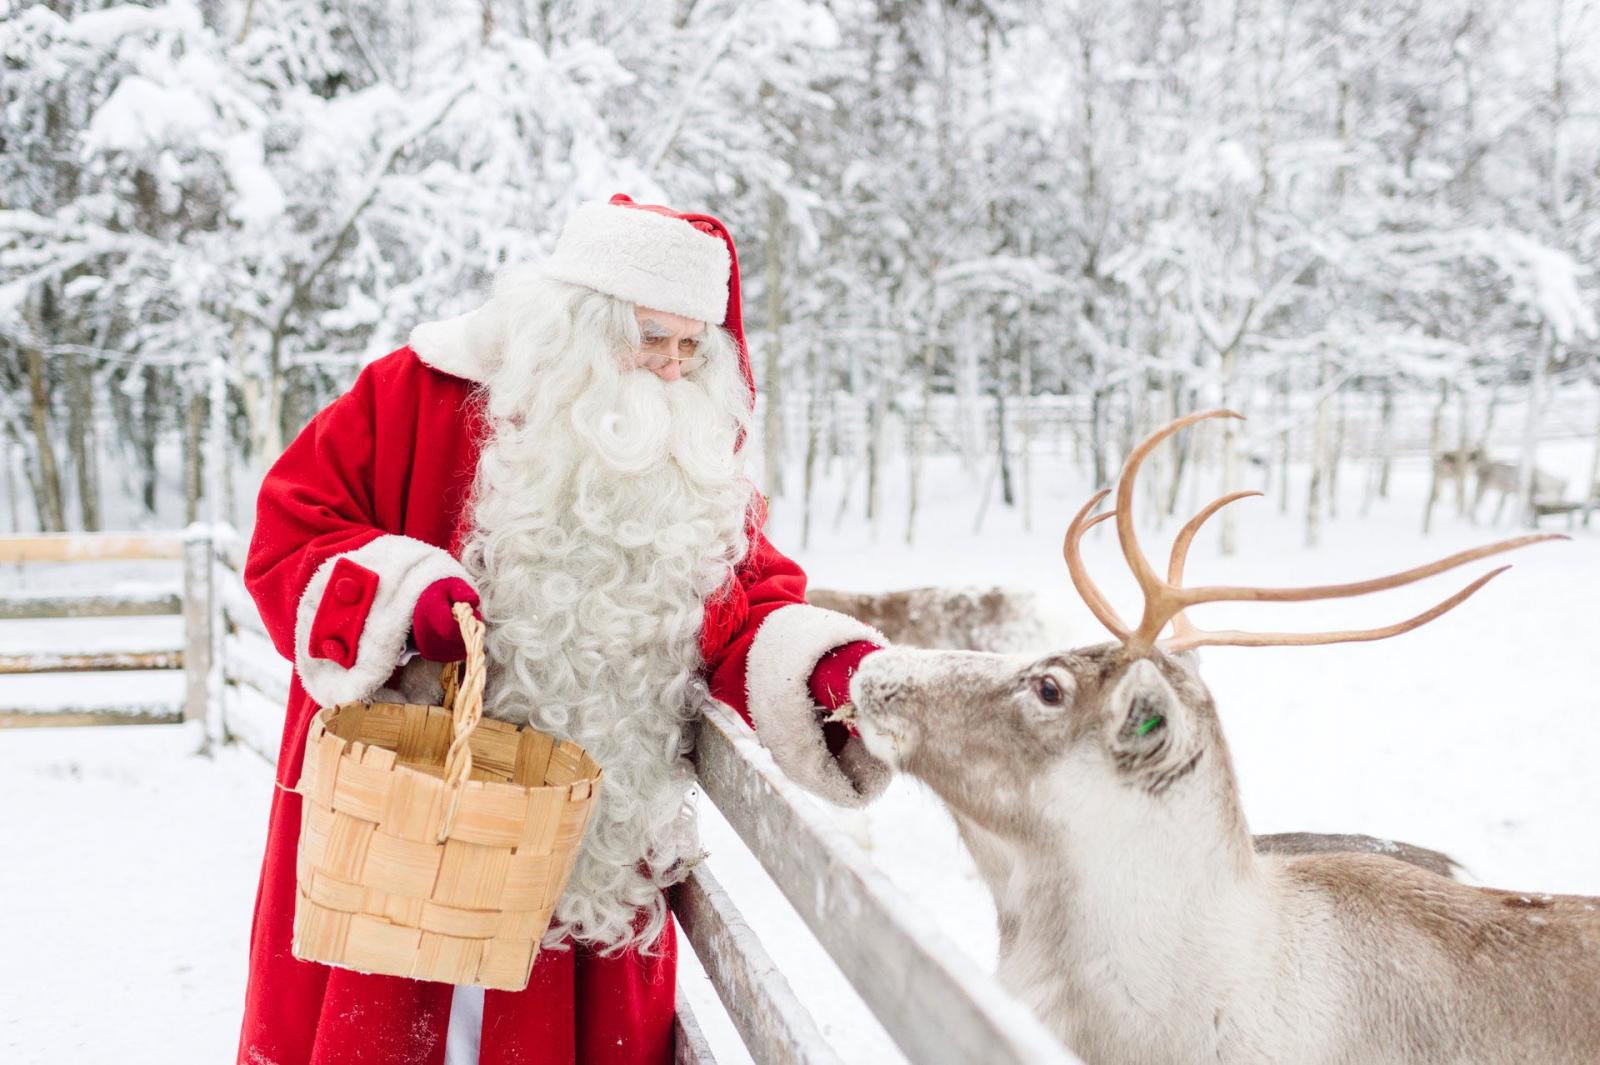 Finlândia brasileira apresenta Papai Noel e árvore de Natal daquela cultura